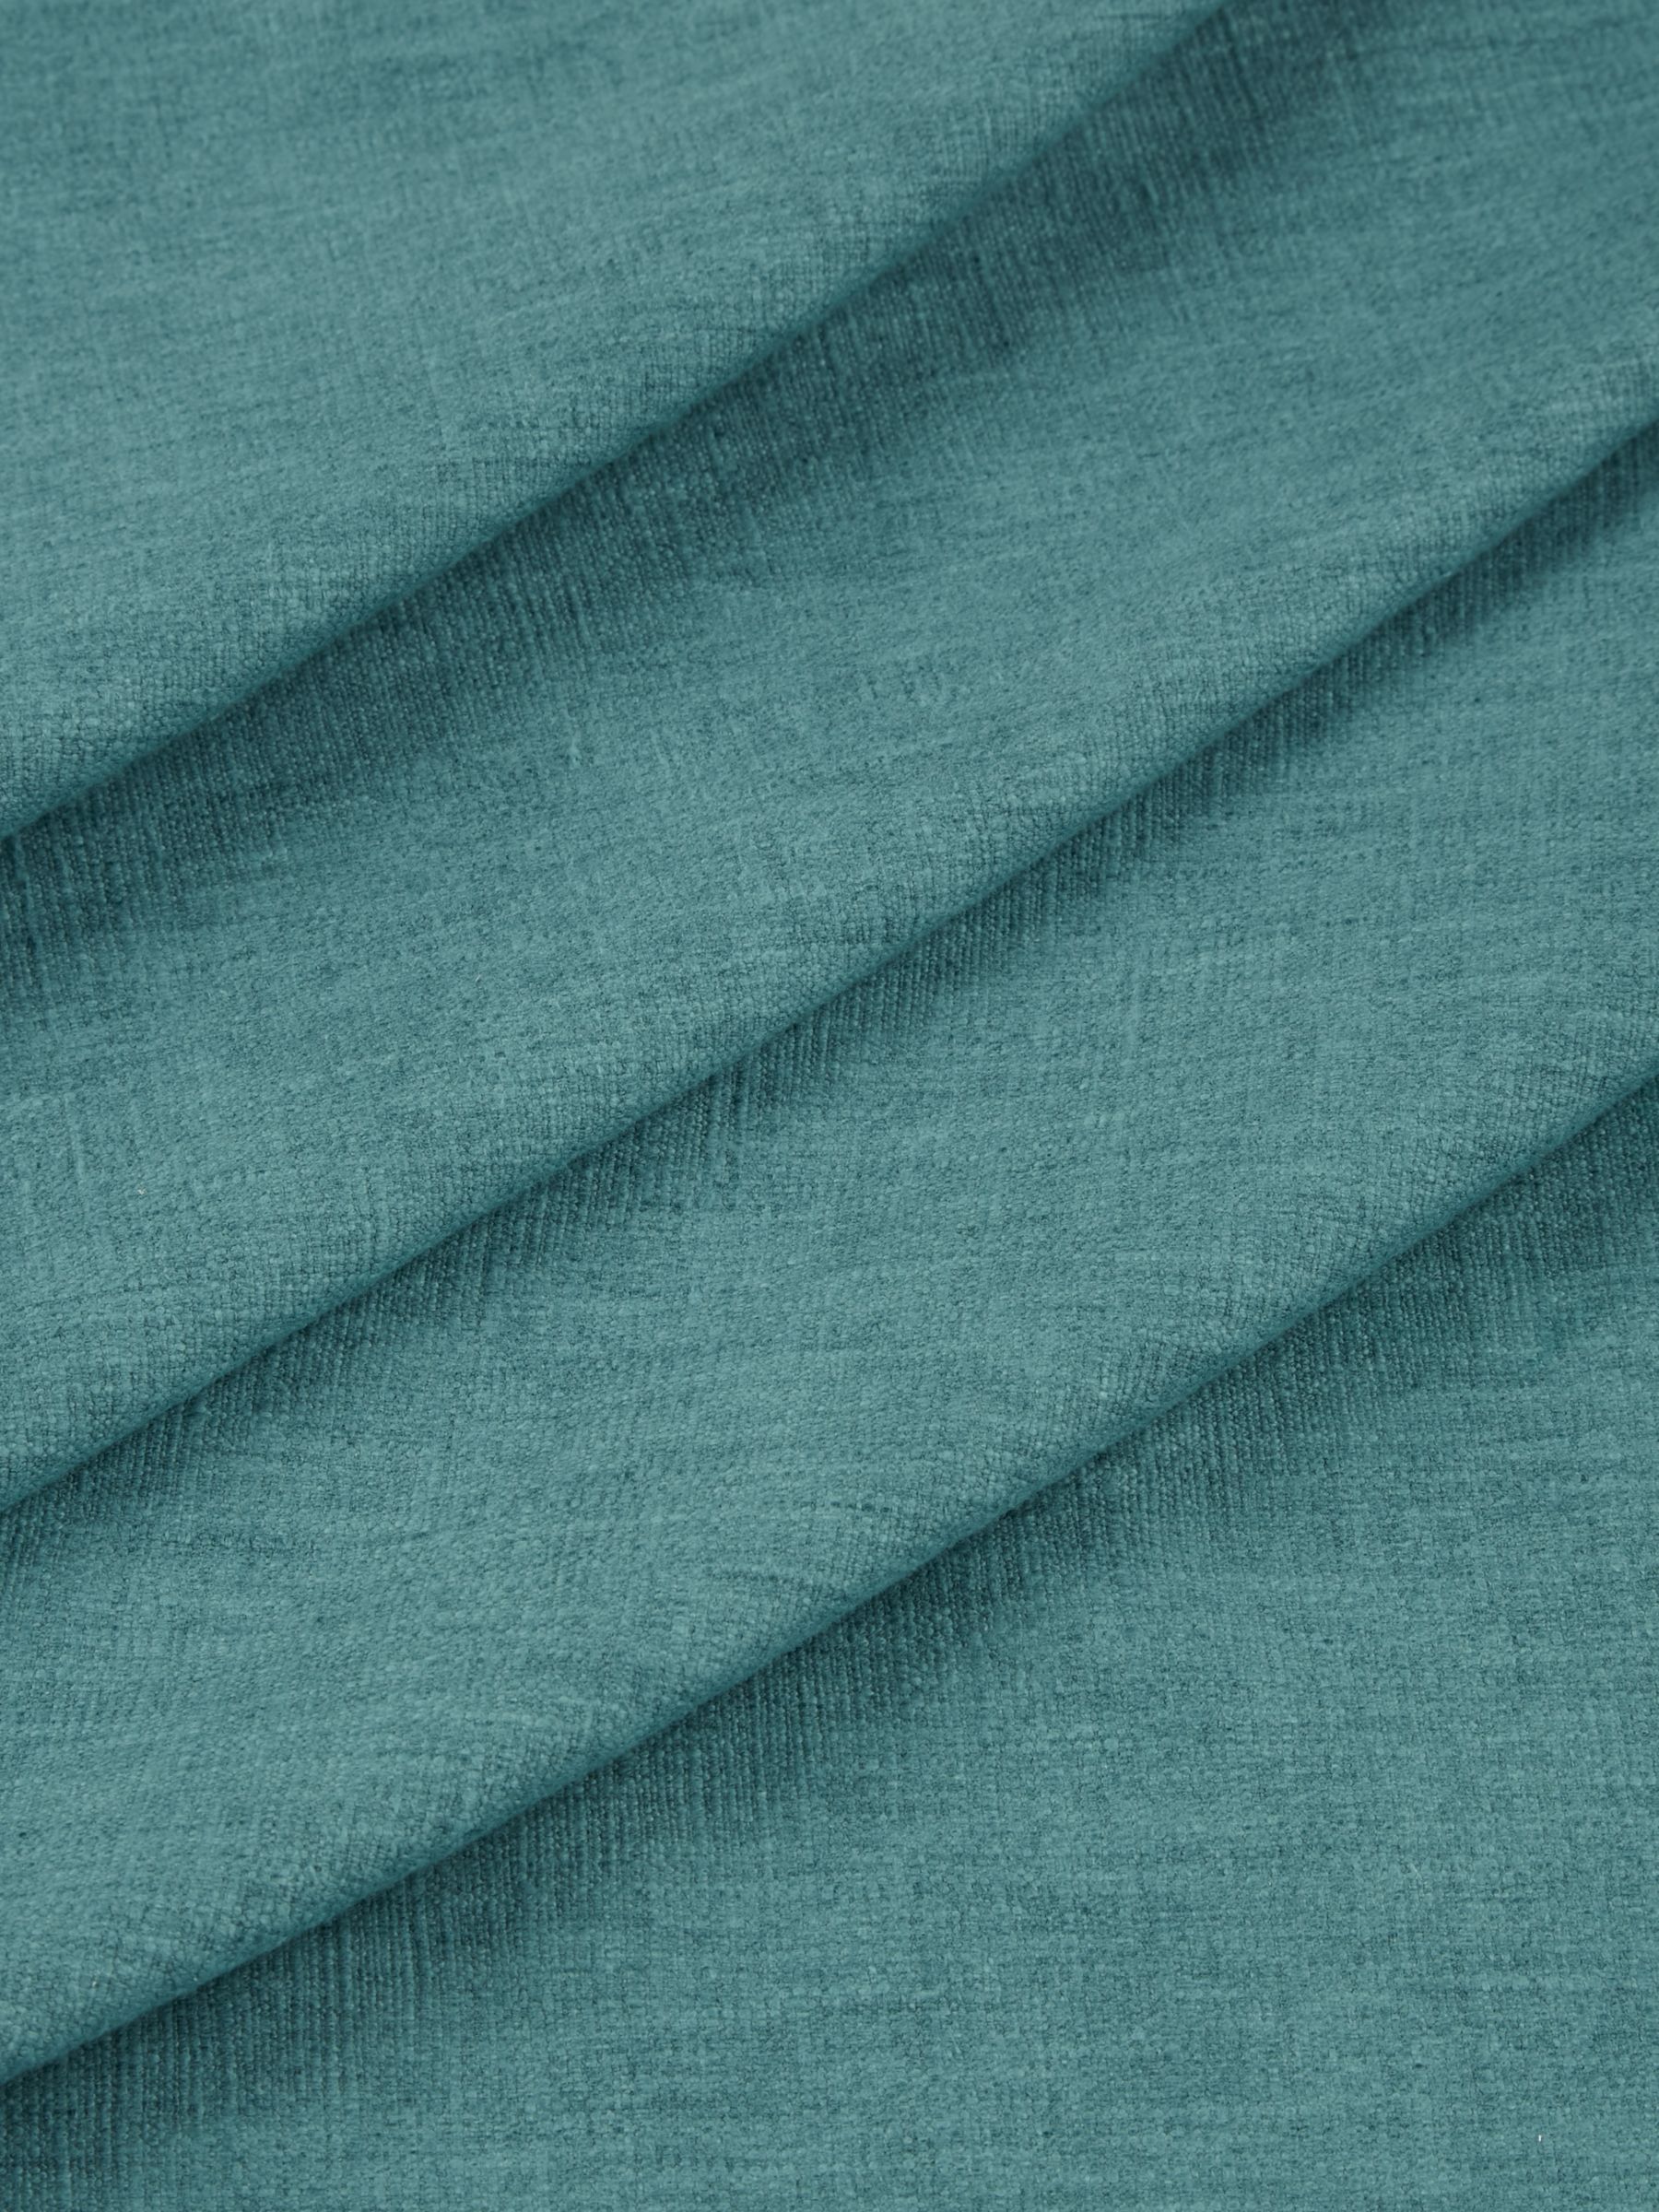 John Lewis Cotton Blend Furnishing Fabric, Peacock